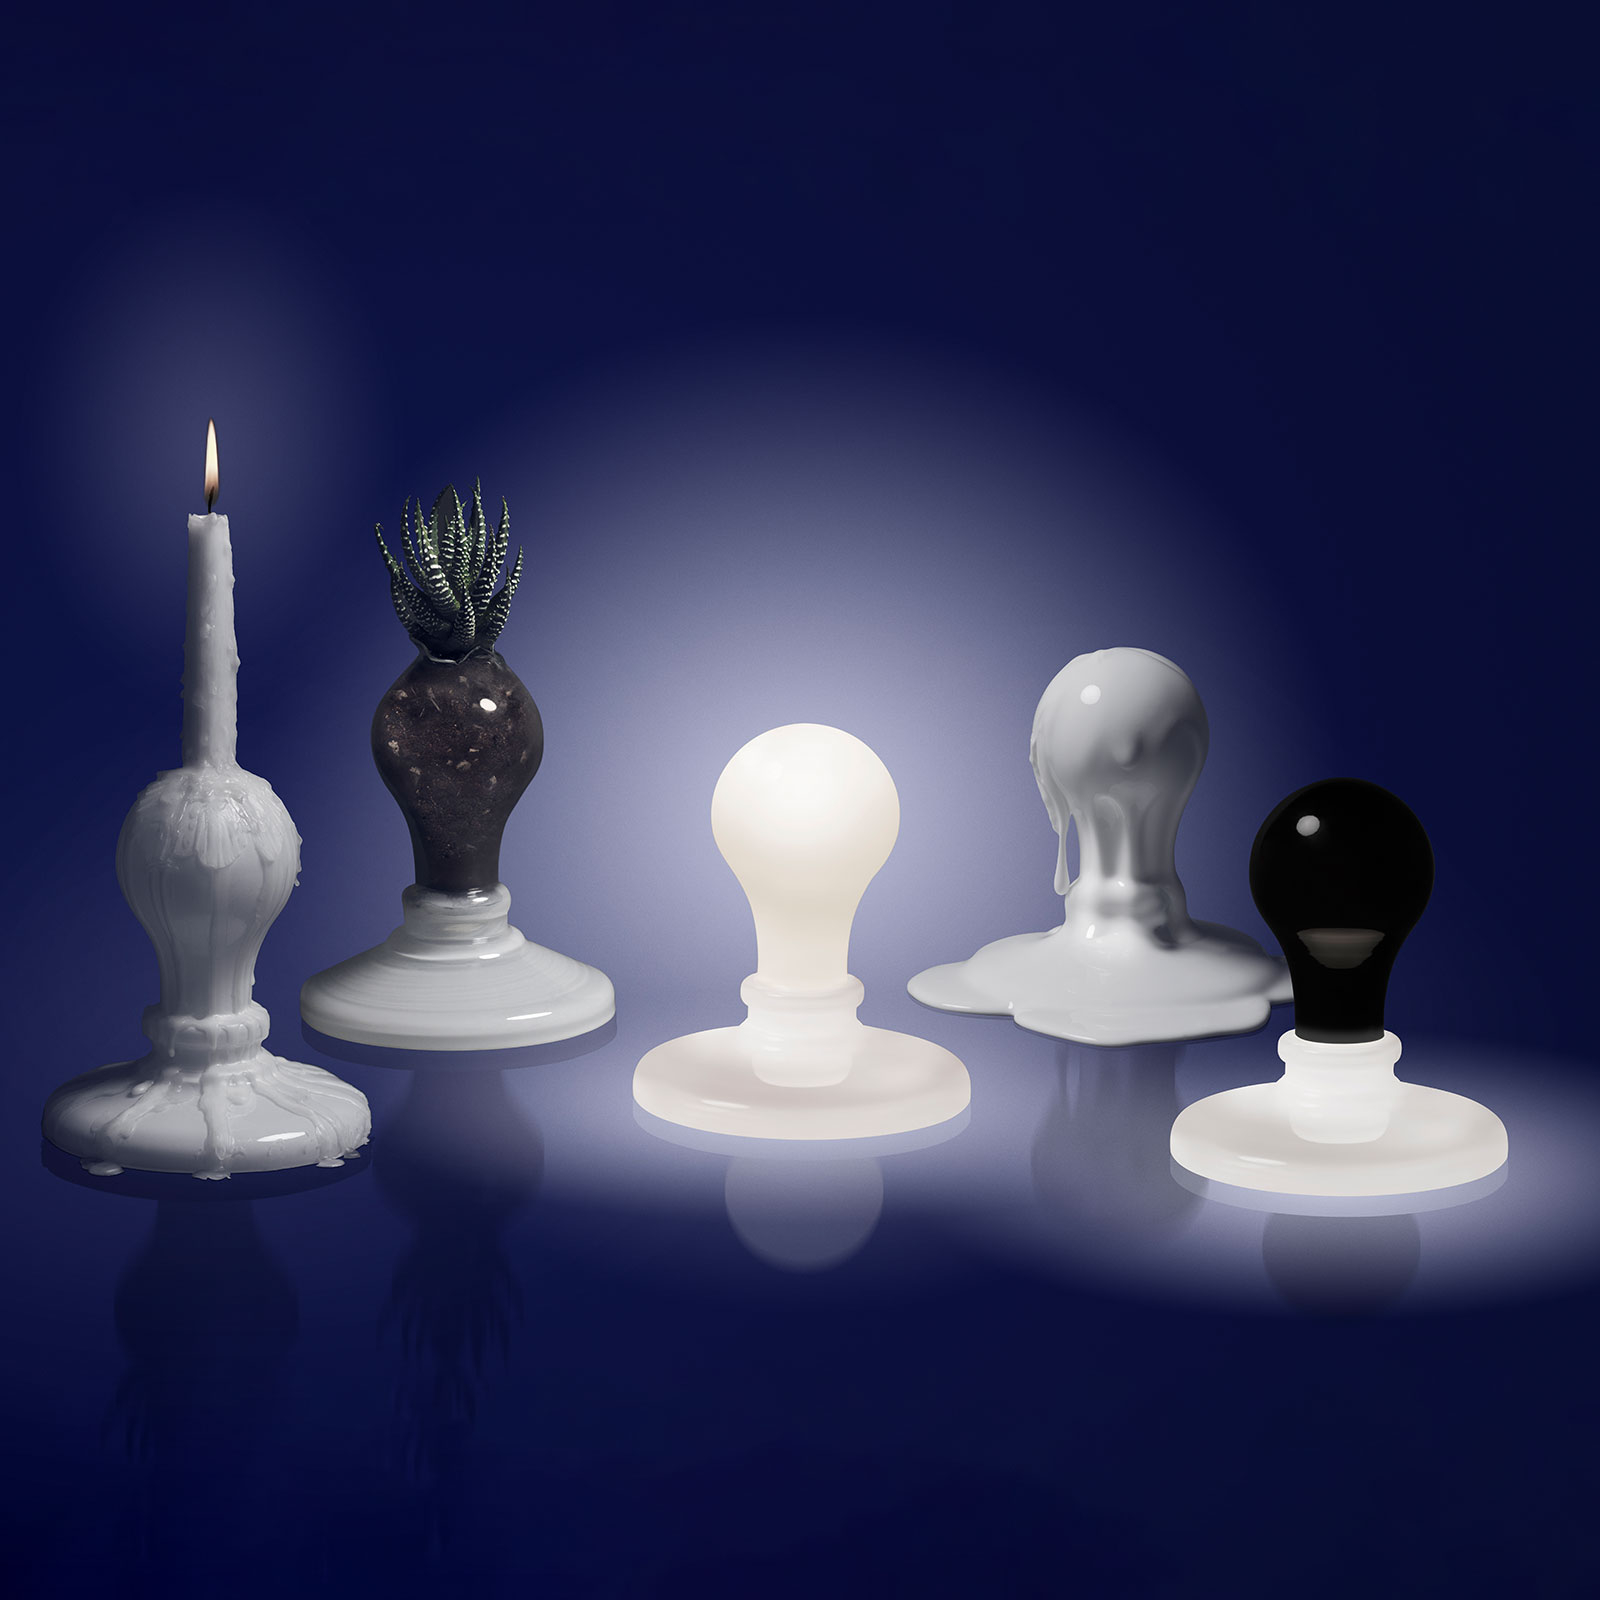 Foscarini White Light lampe de table LED